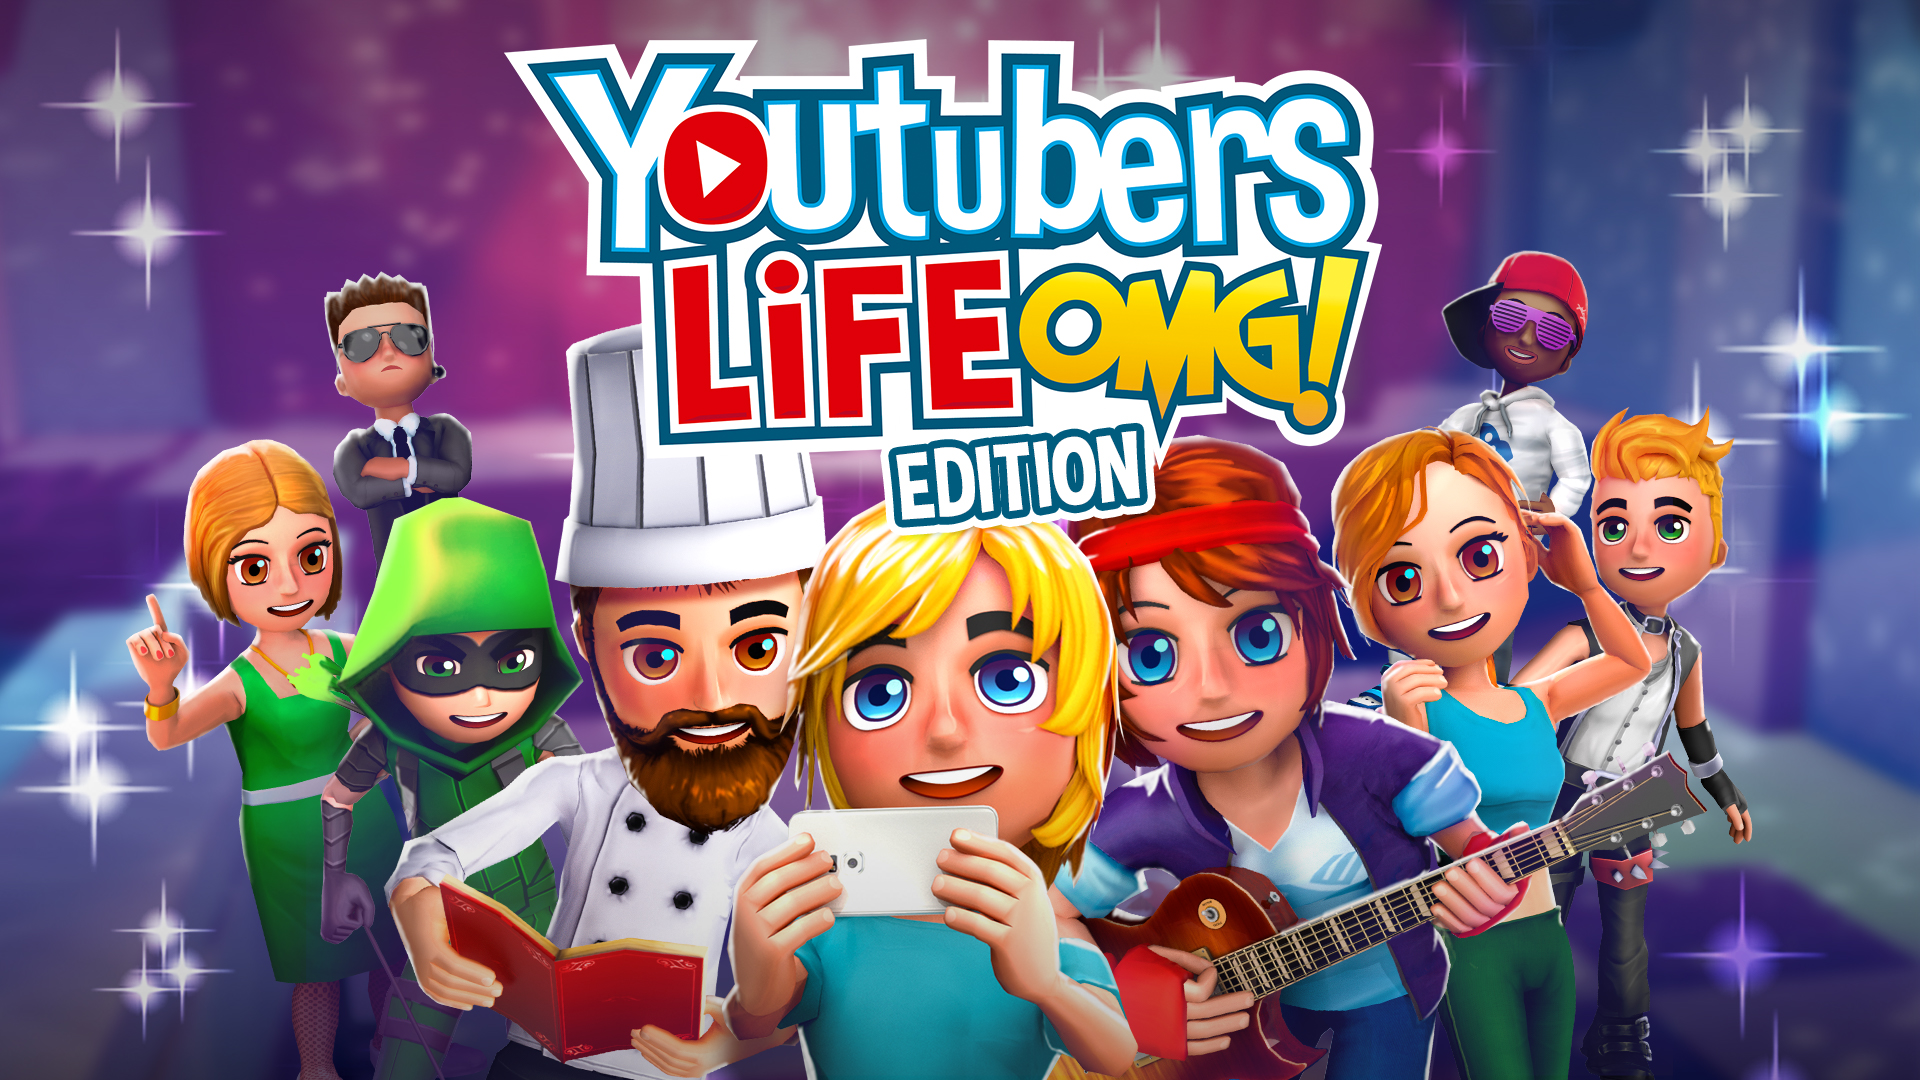 youtubers-life-omg-edition-switch-hero.jpg